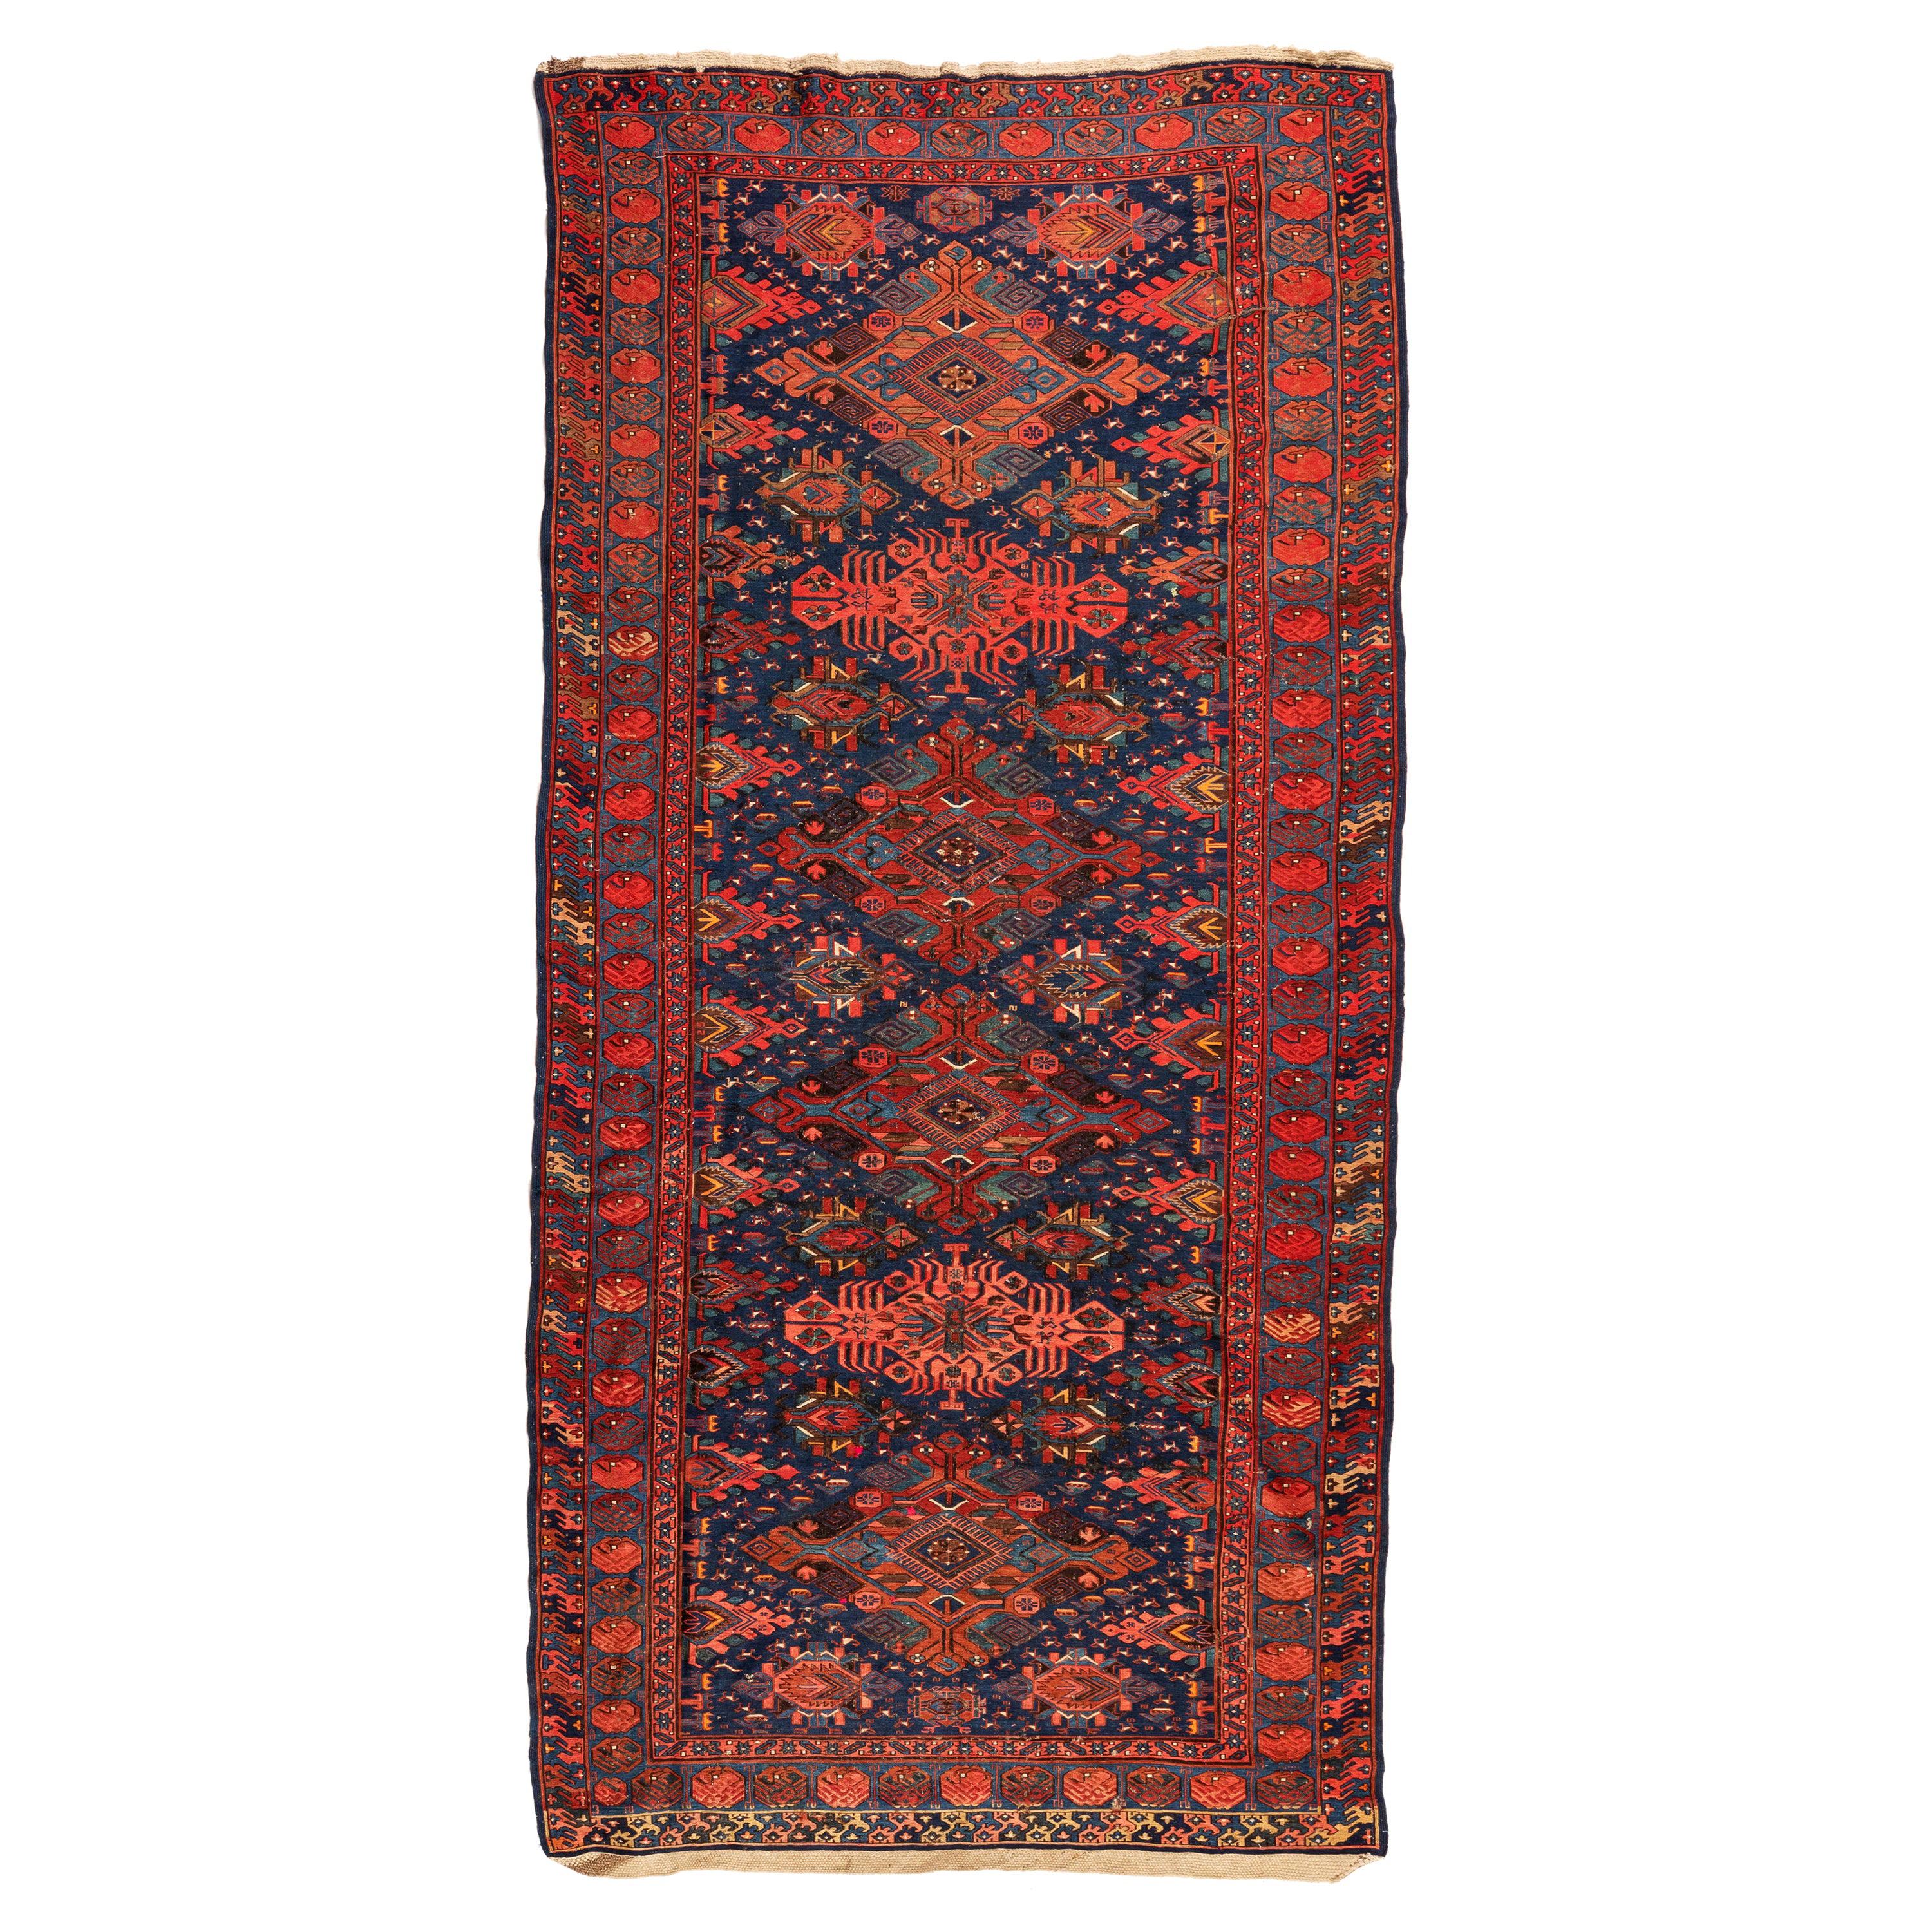 Antique Red and Navy Blue Geometric Tribal Caucasian Soumak Rug